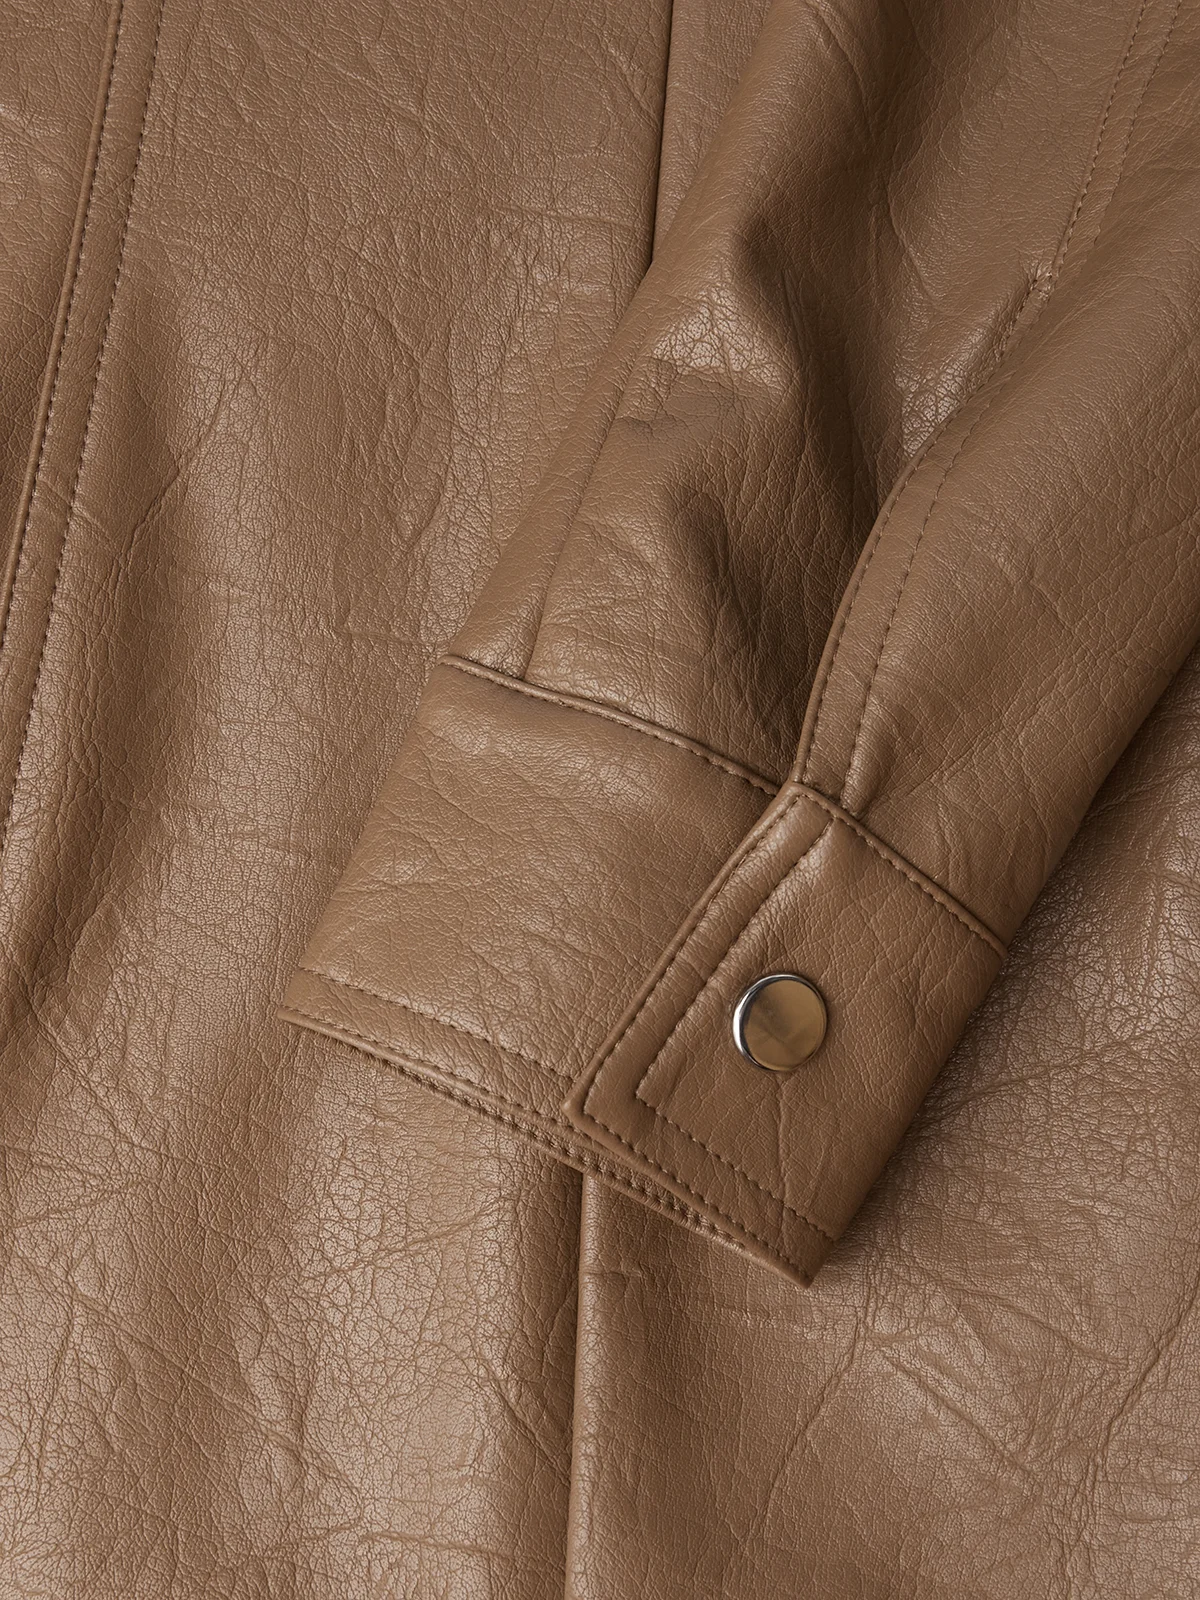 Urban Shawl Collar Plain Faux Leather Coat